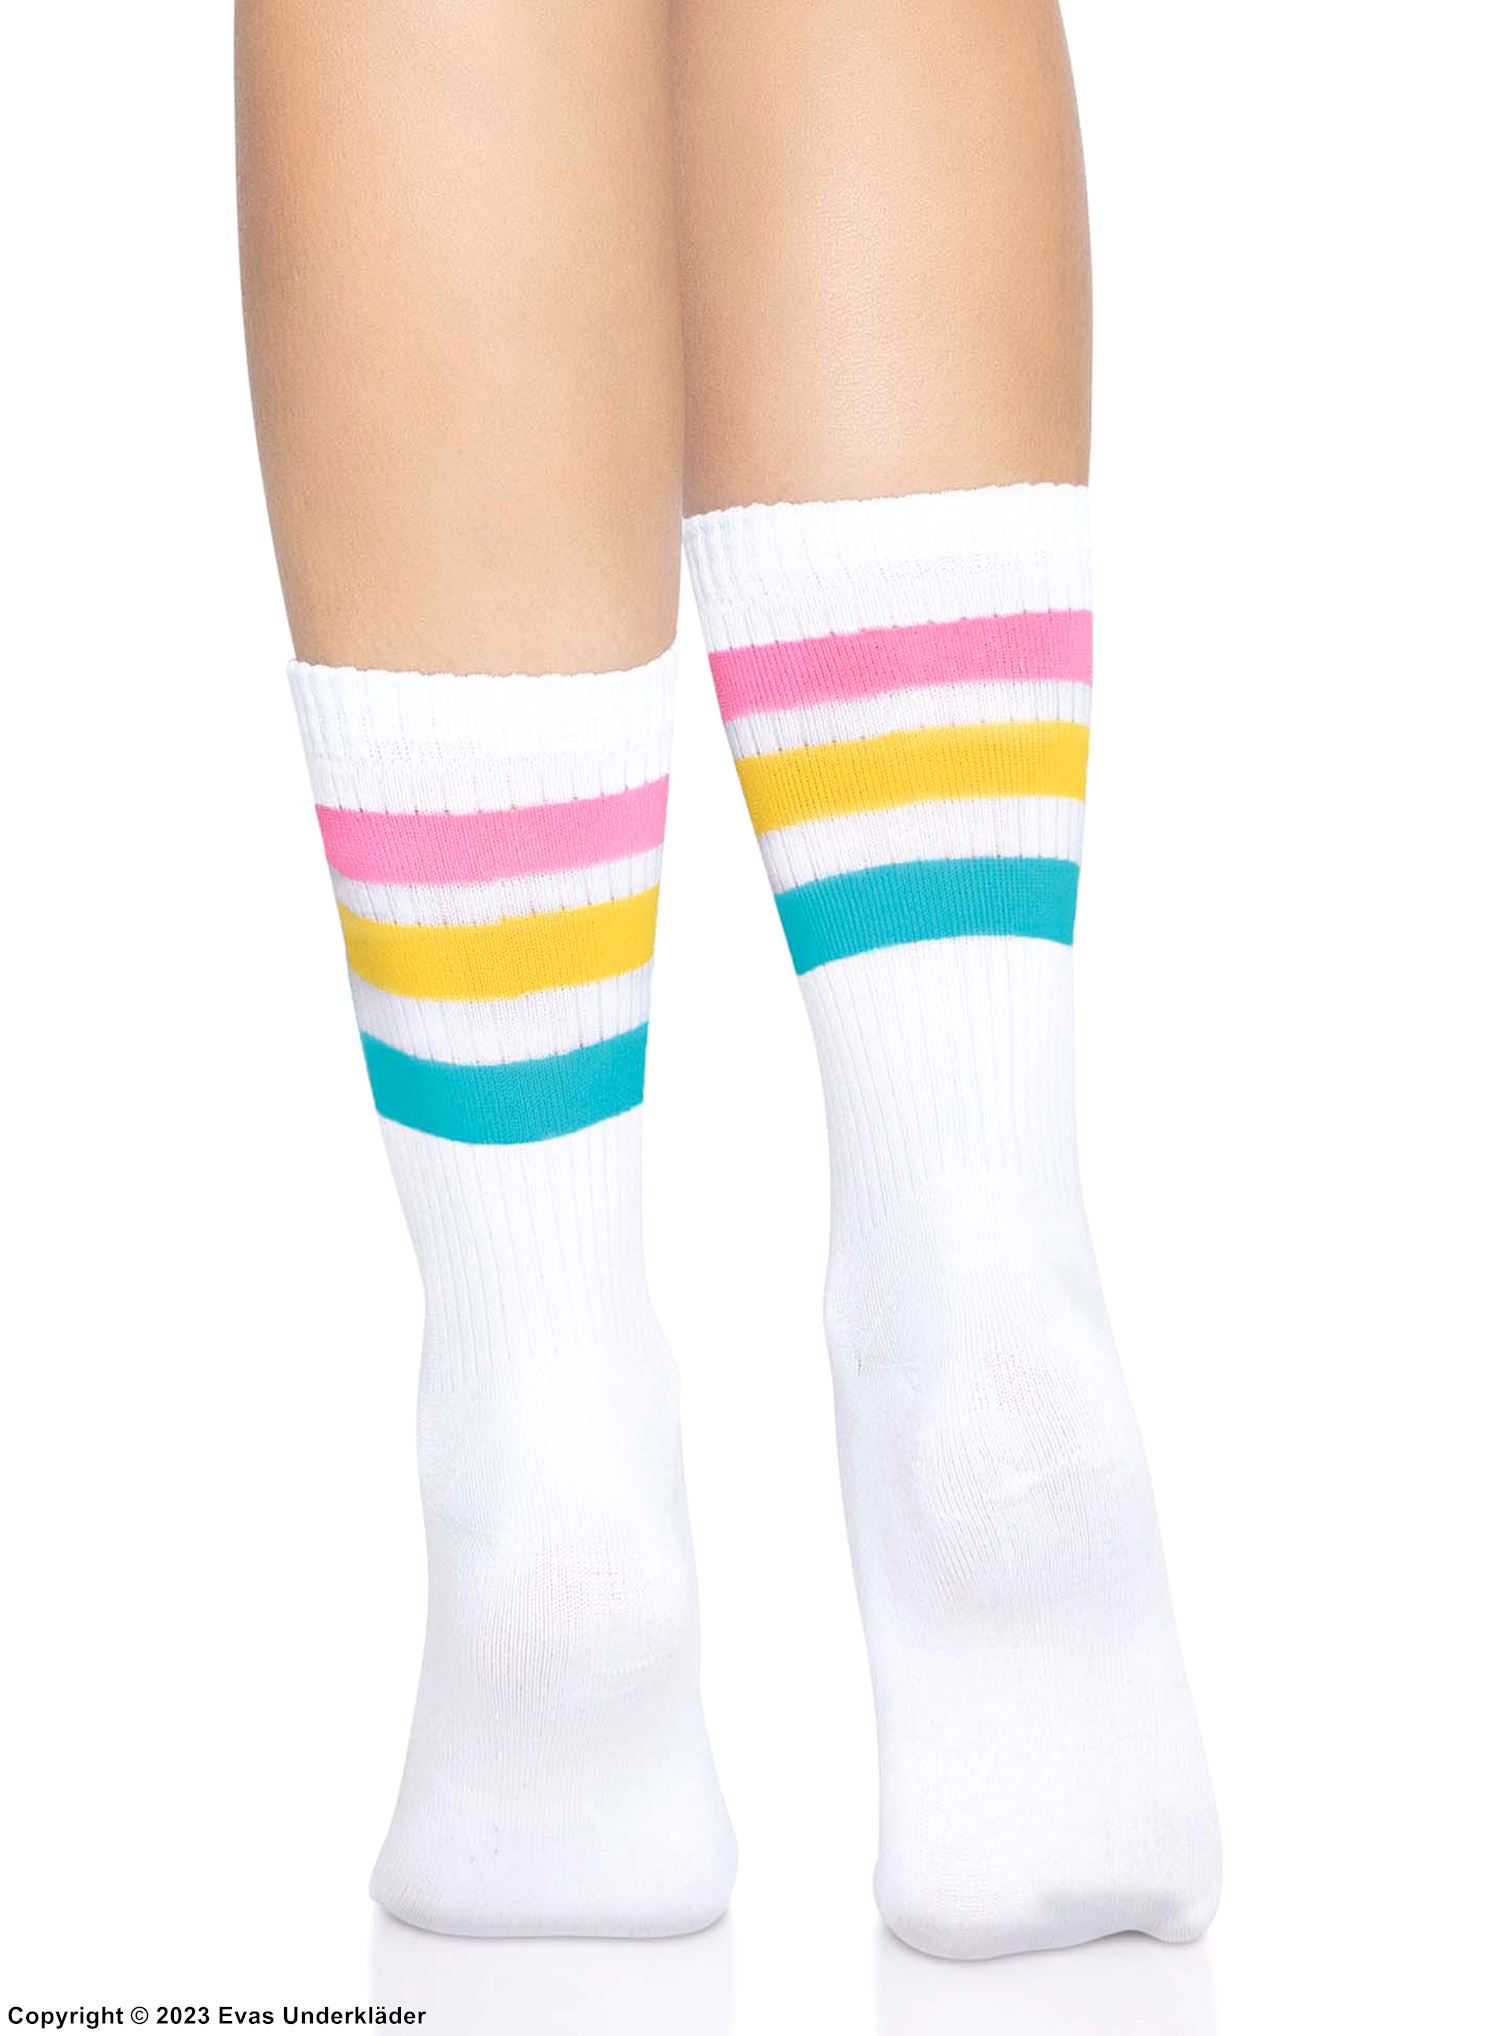 Ankle socks, rainbow color